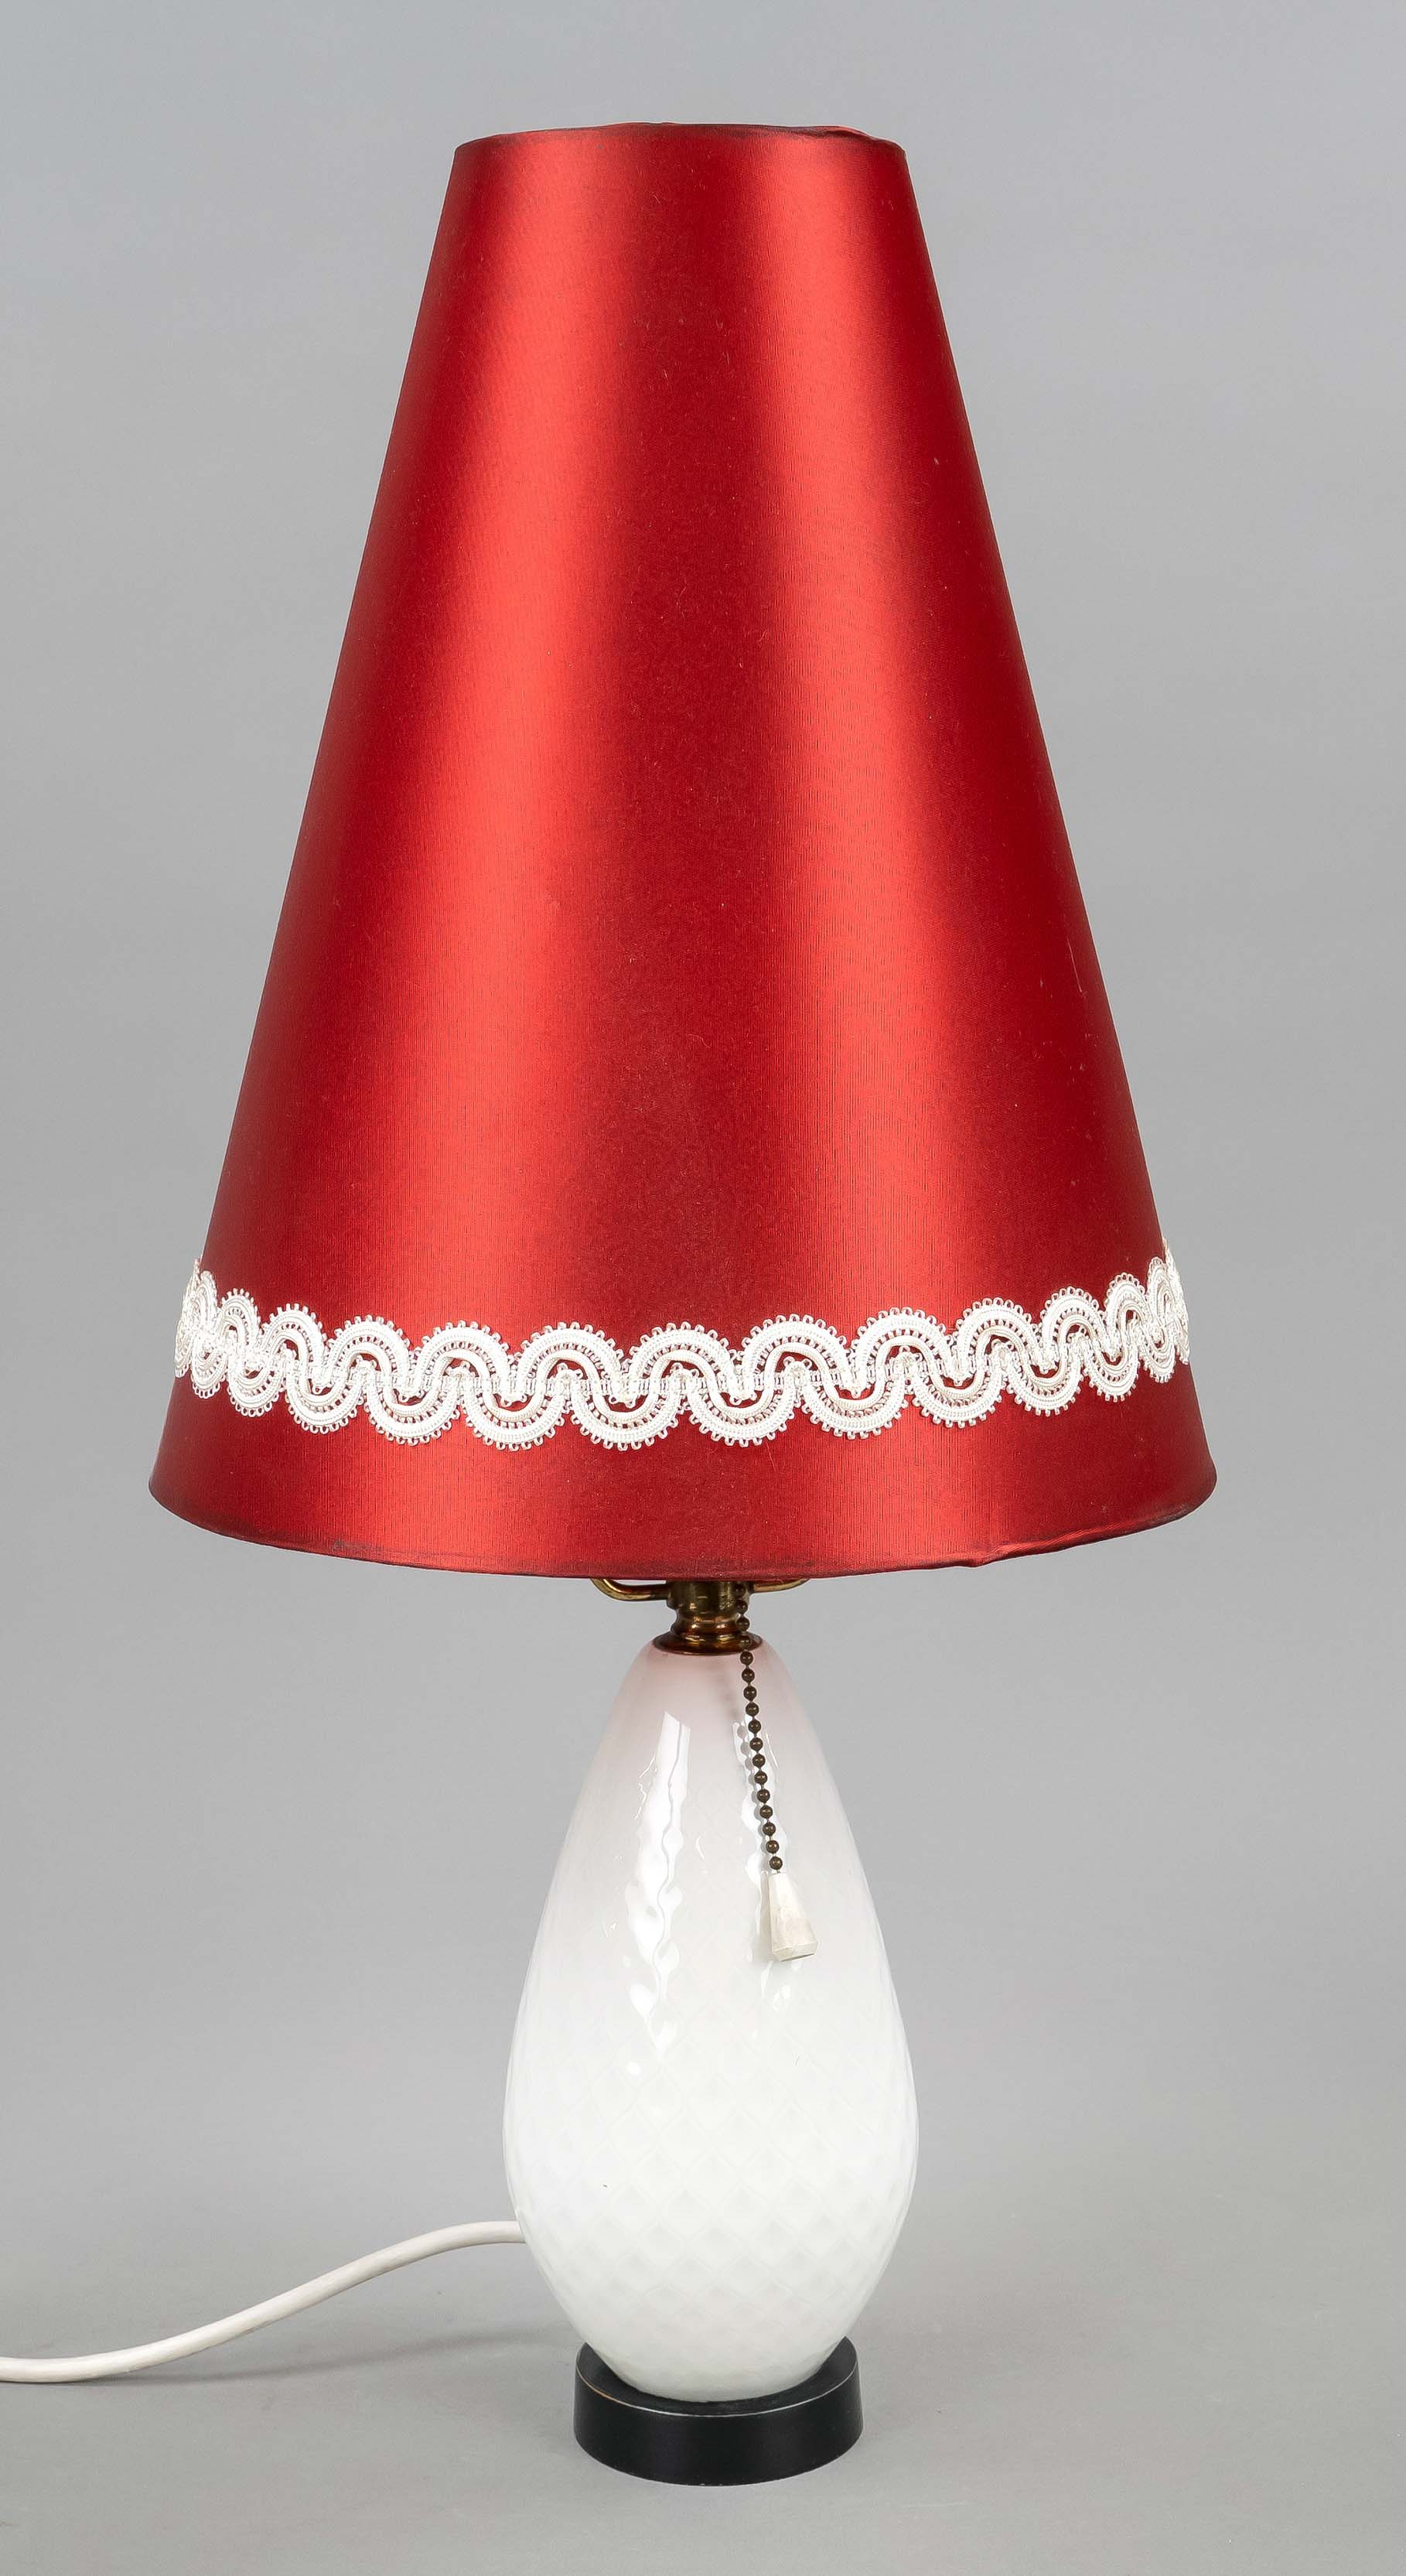 Table lamp, lamp base from a vase, KPM Berlin, 20th c., cob shape, designed by Hubert Griemert (